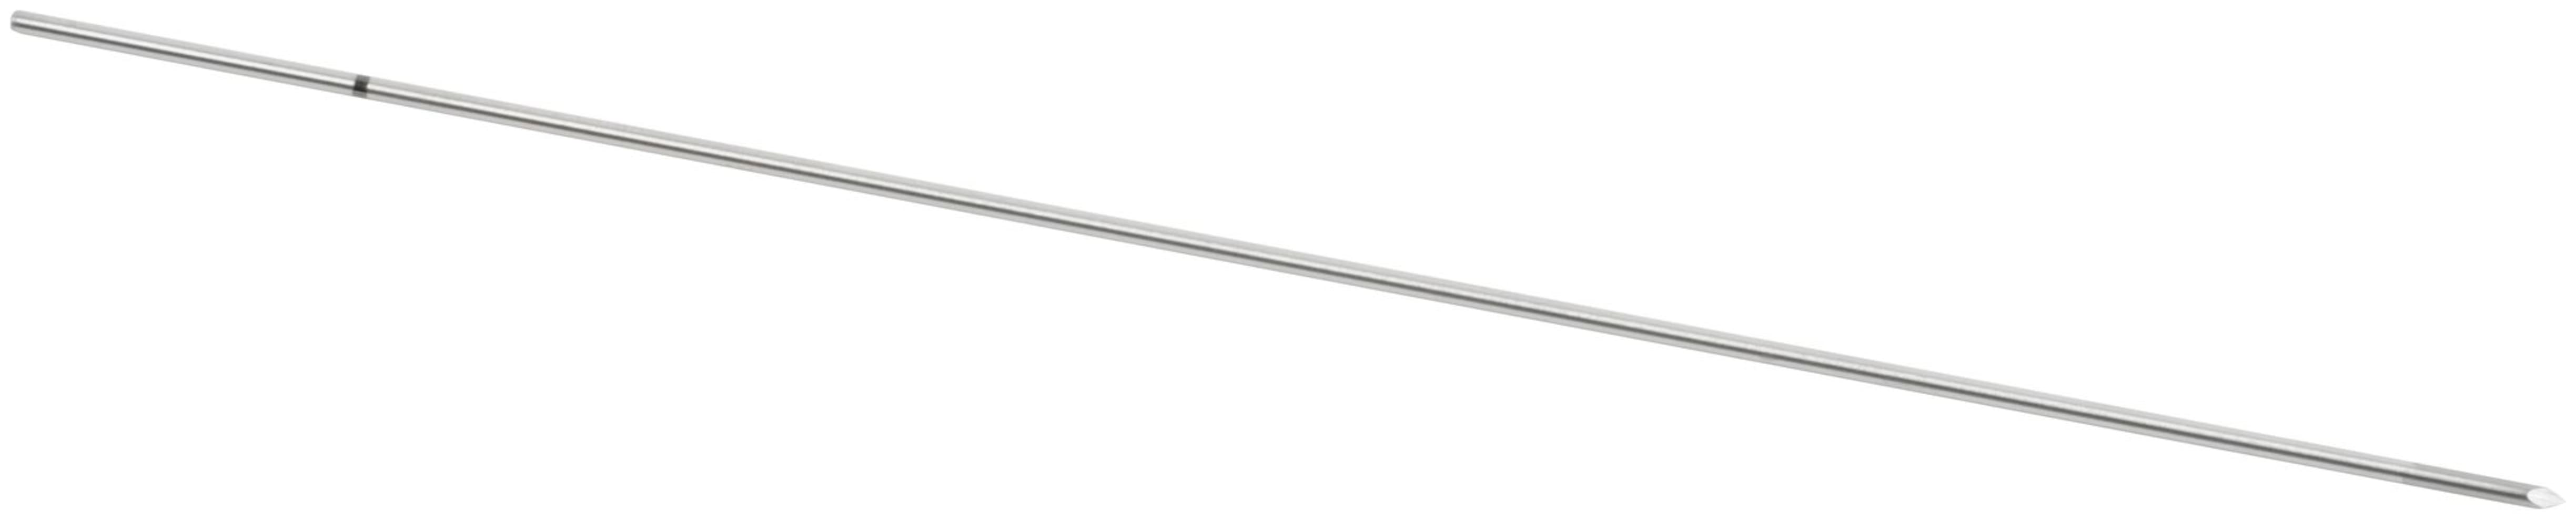 1.57 mm Führungsdraht mit Trokarspitze, 17.78 cm lang